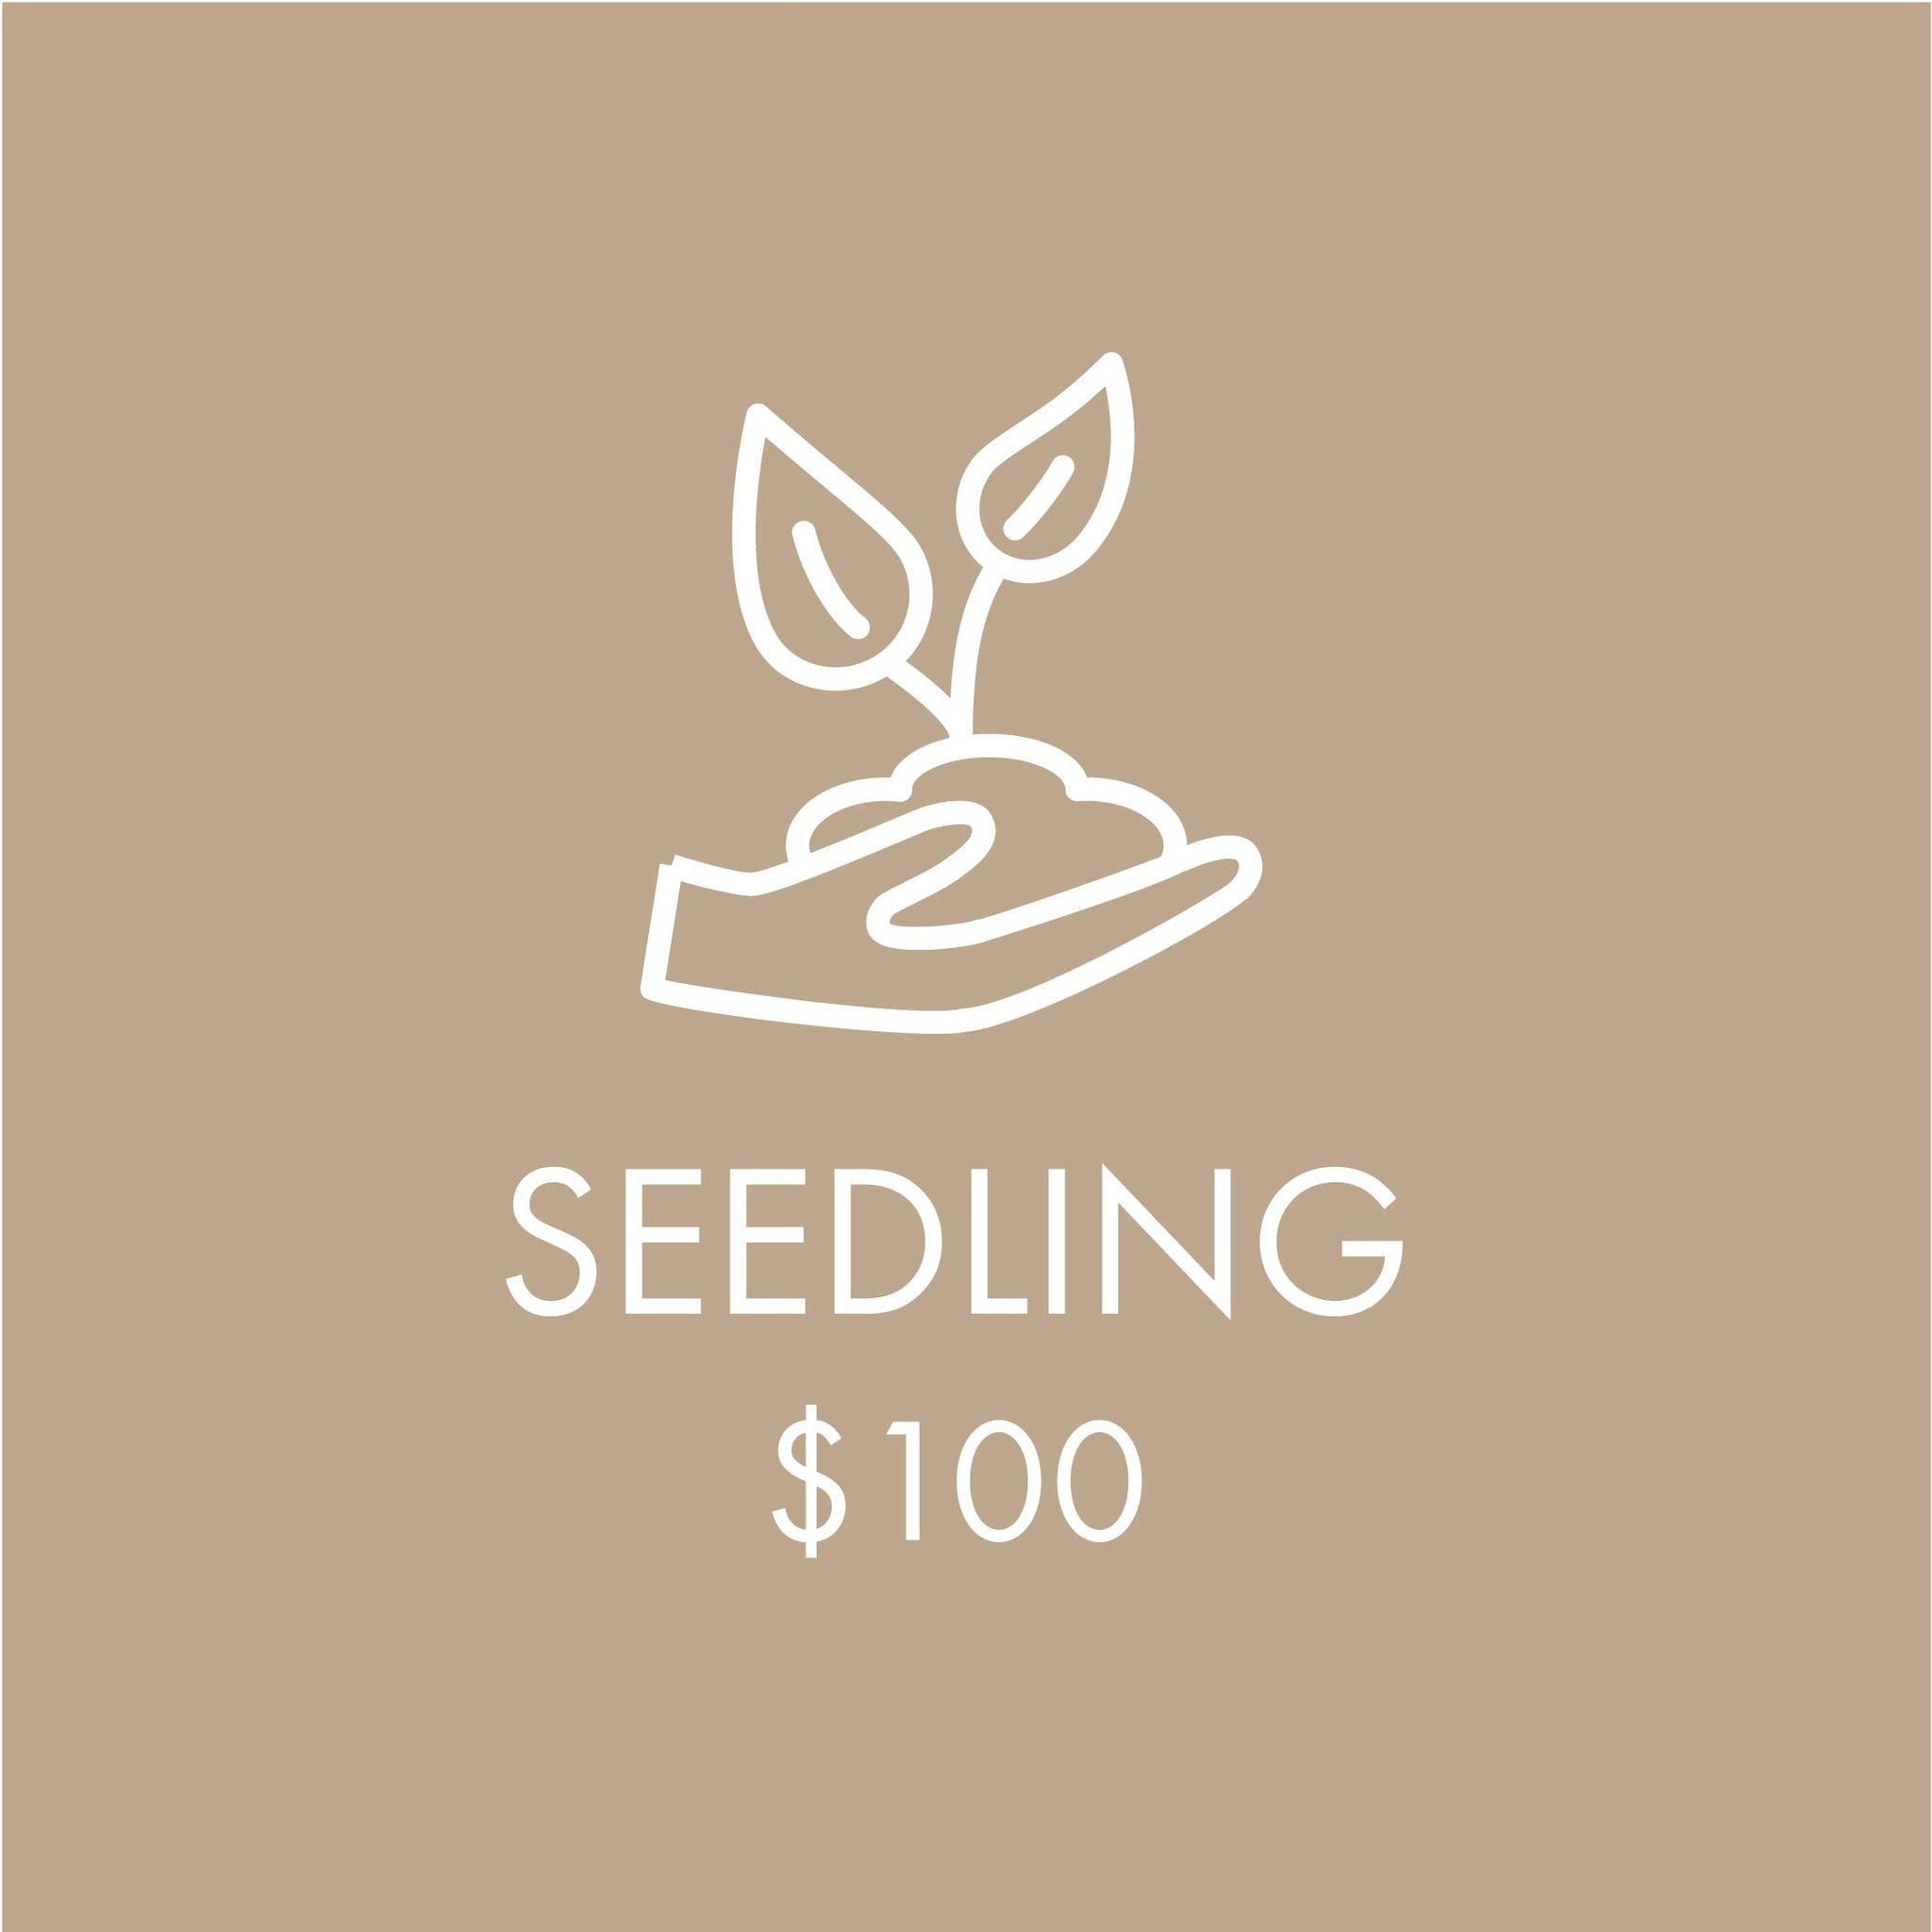 Support LongHouse - Seedling $100